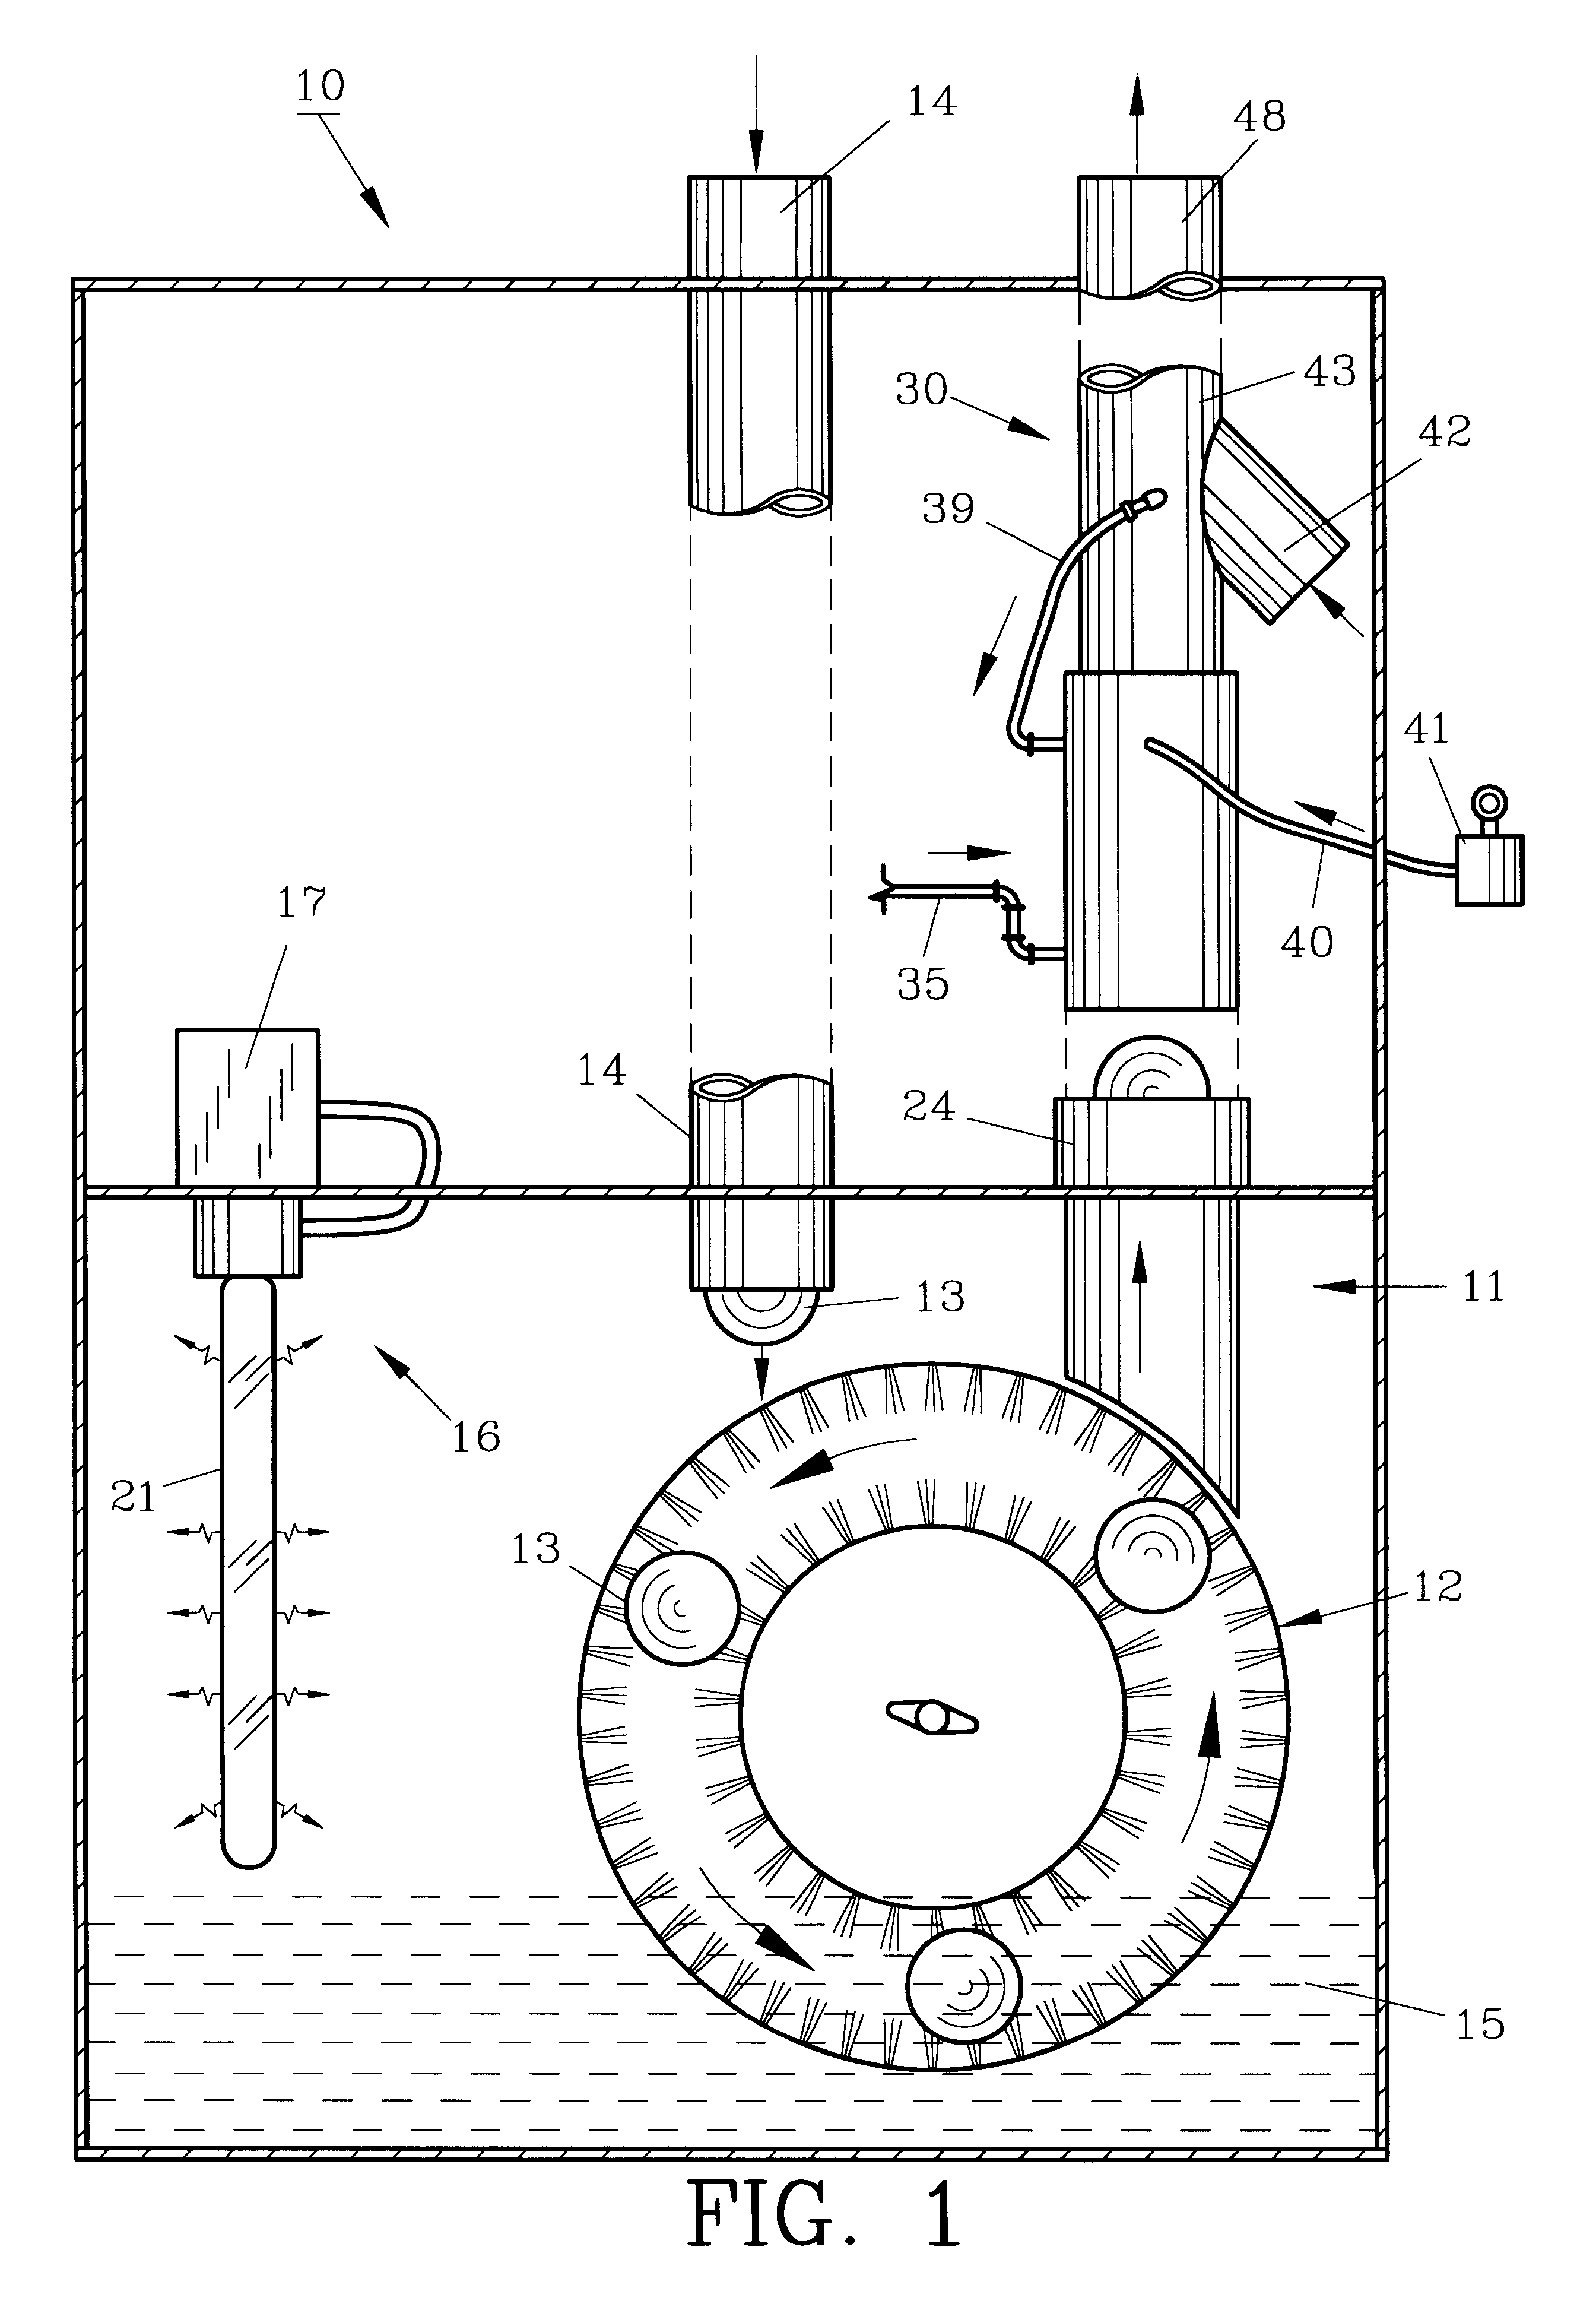 Ball washing apparatus and method